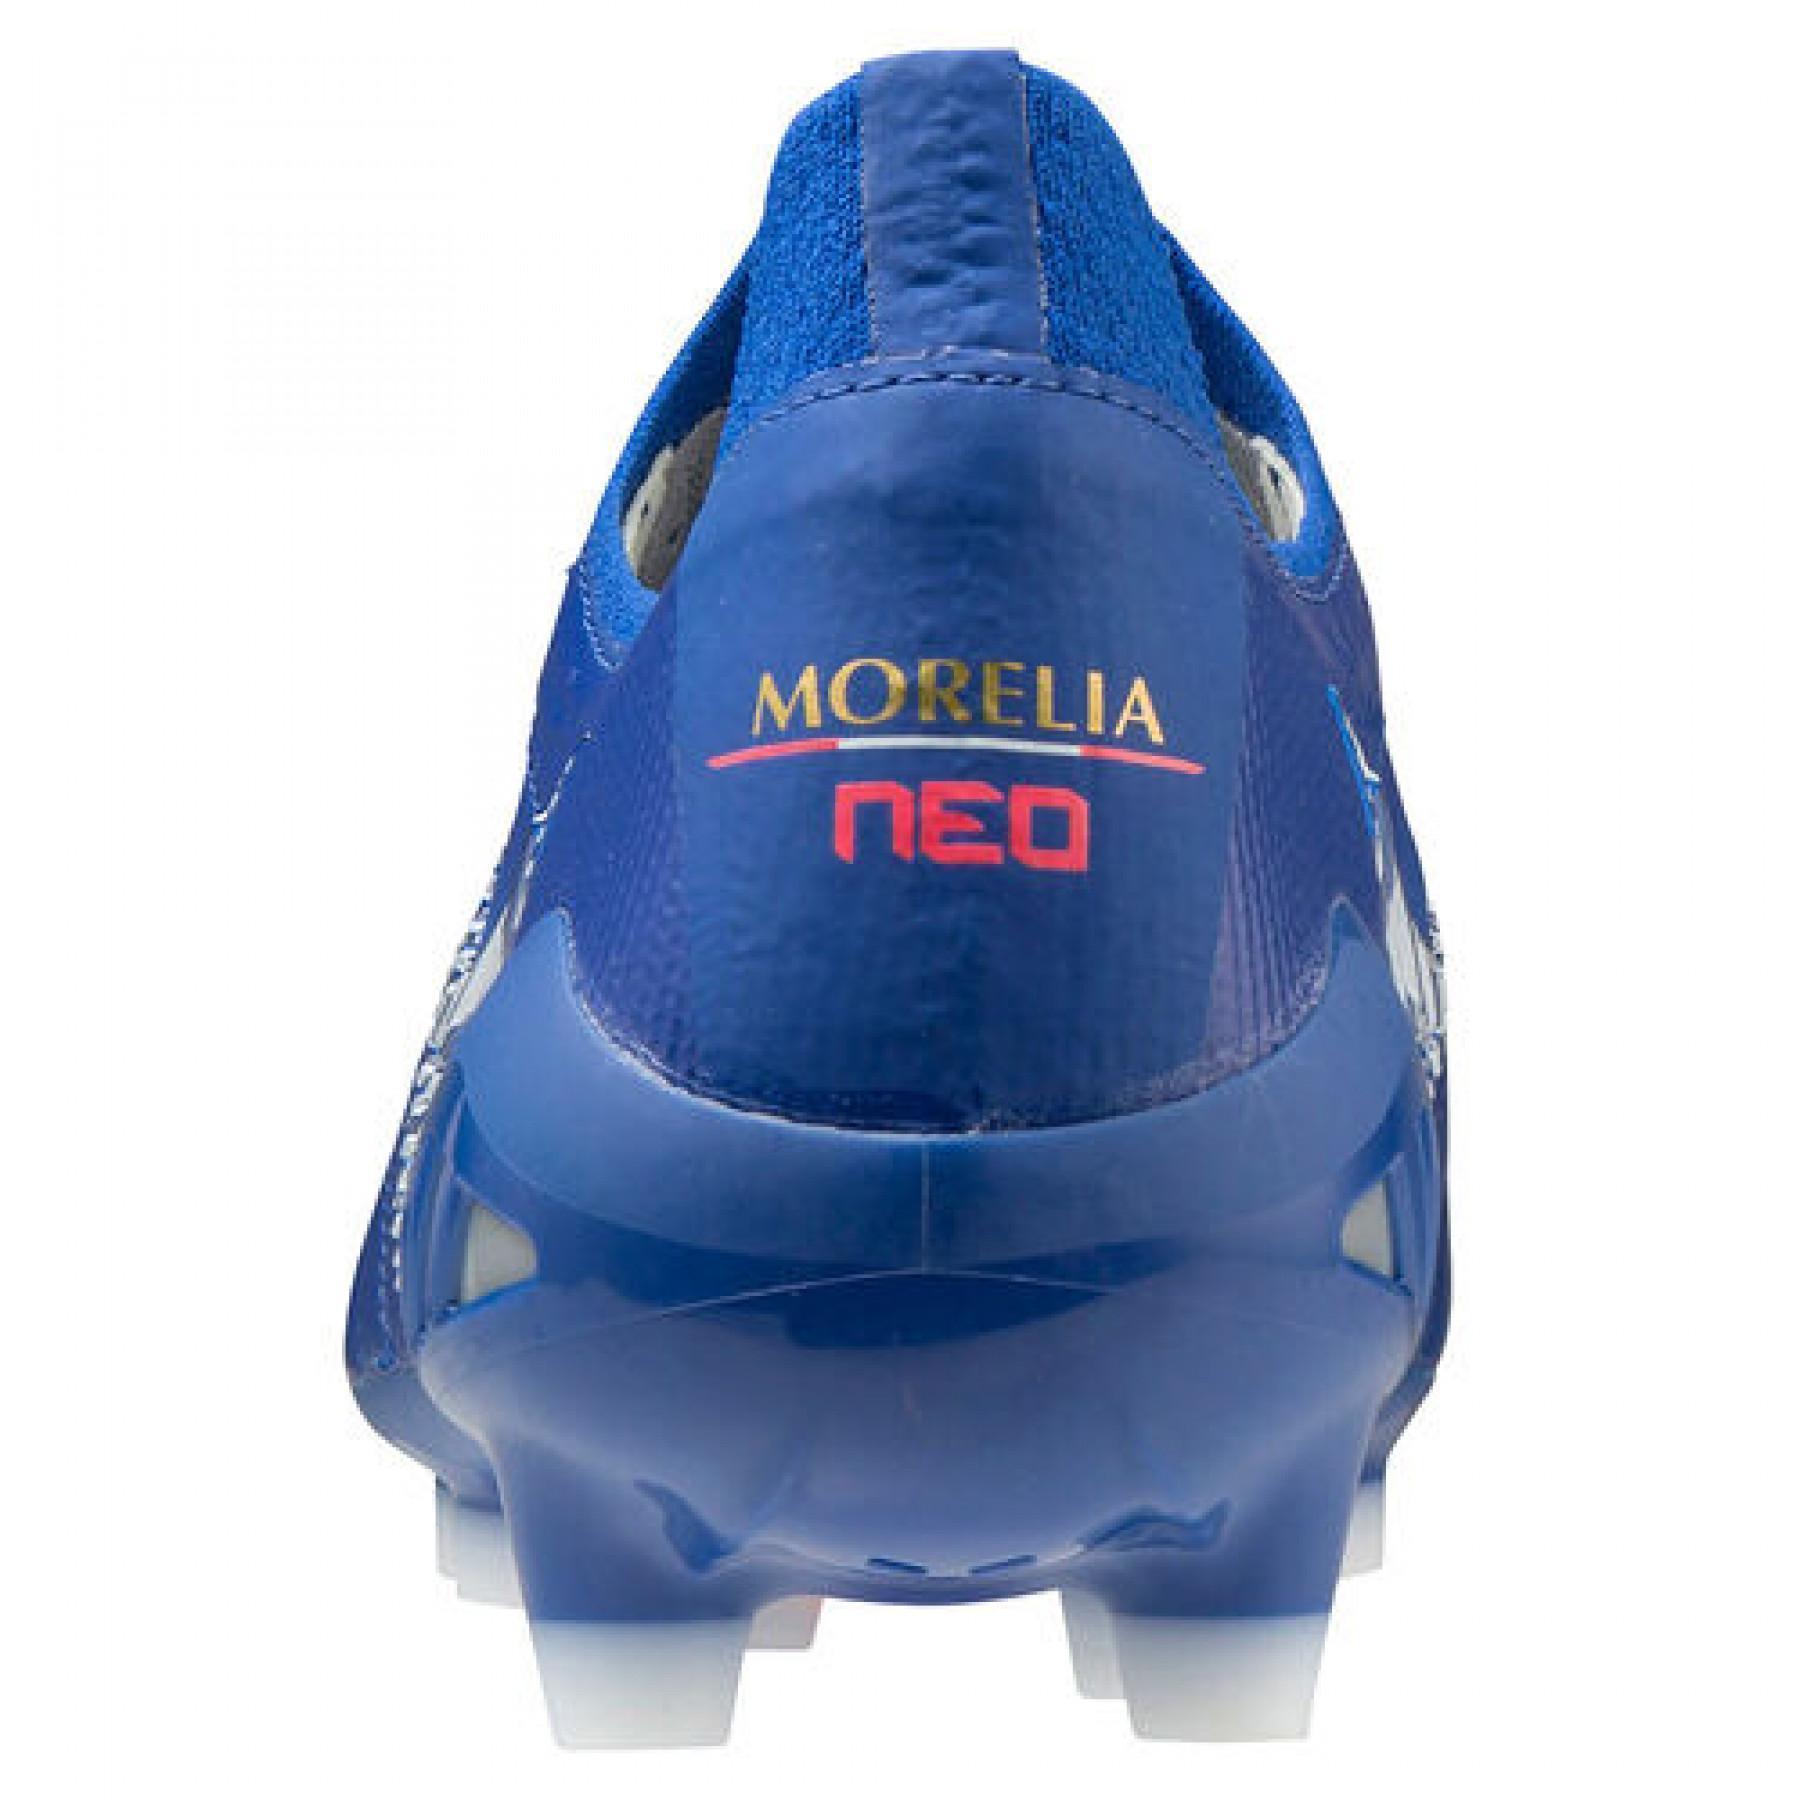 Zapatos Mizuno Morelia neo 3 beta japan